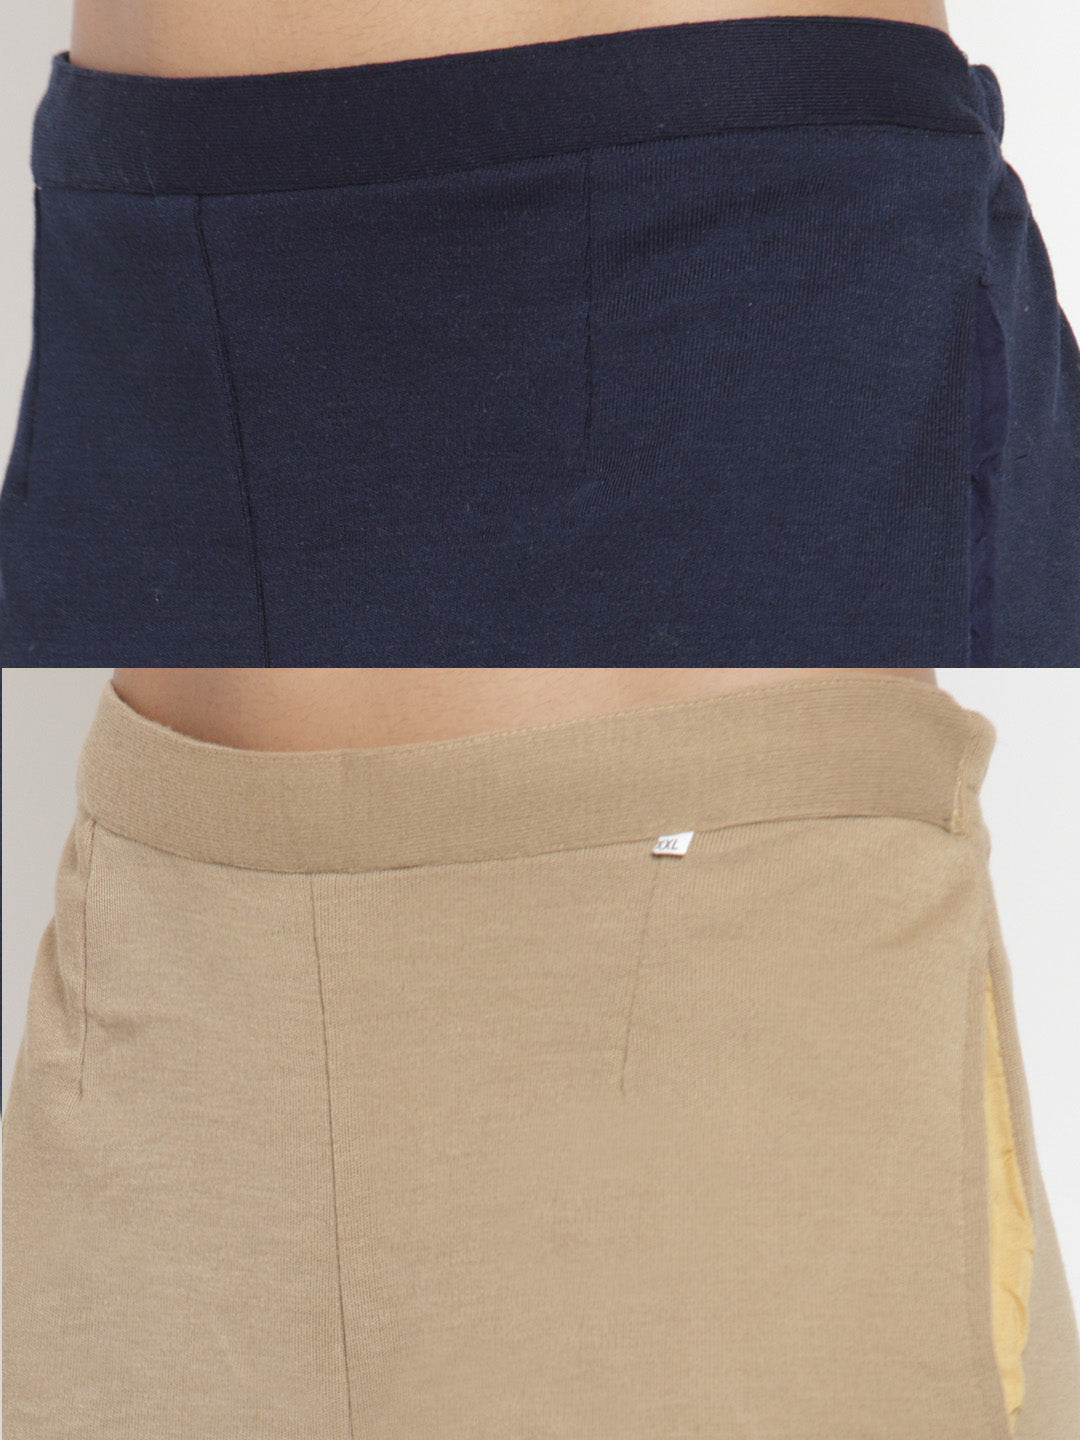 Clora Navy Blue & Light Fawn Solid Woolen Trouser (Pack of 2)